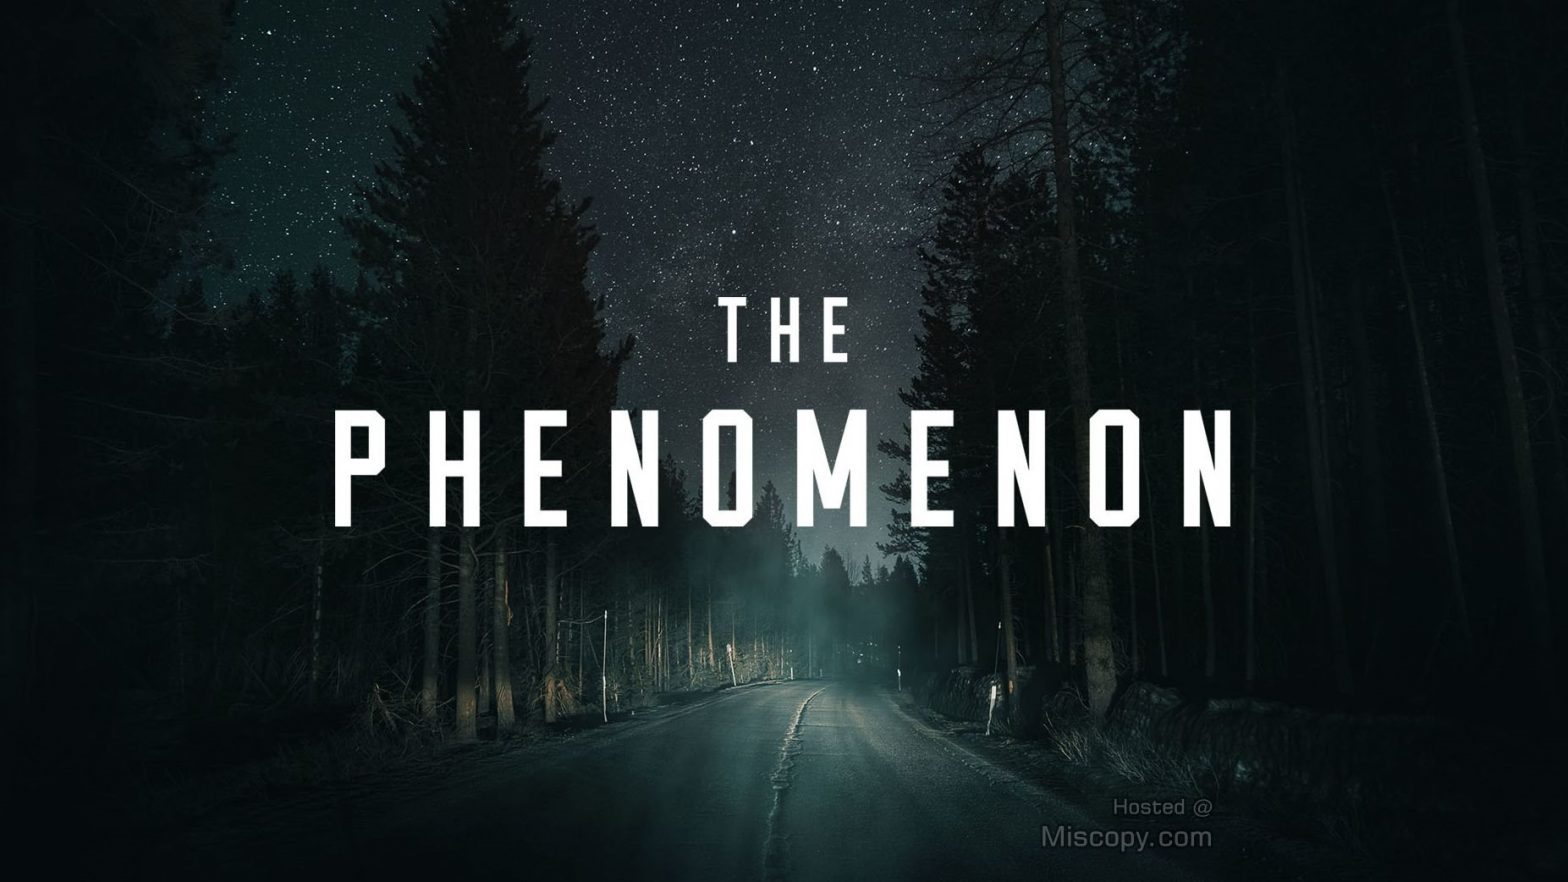 The Phenomenon 2020 - UFO Documentary